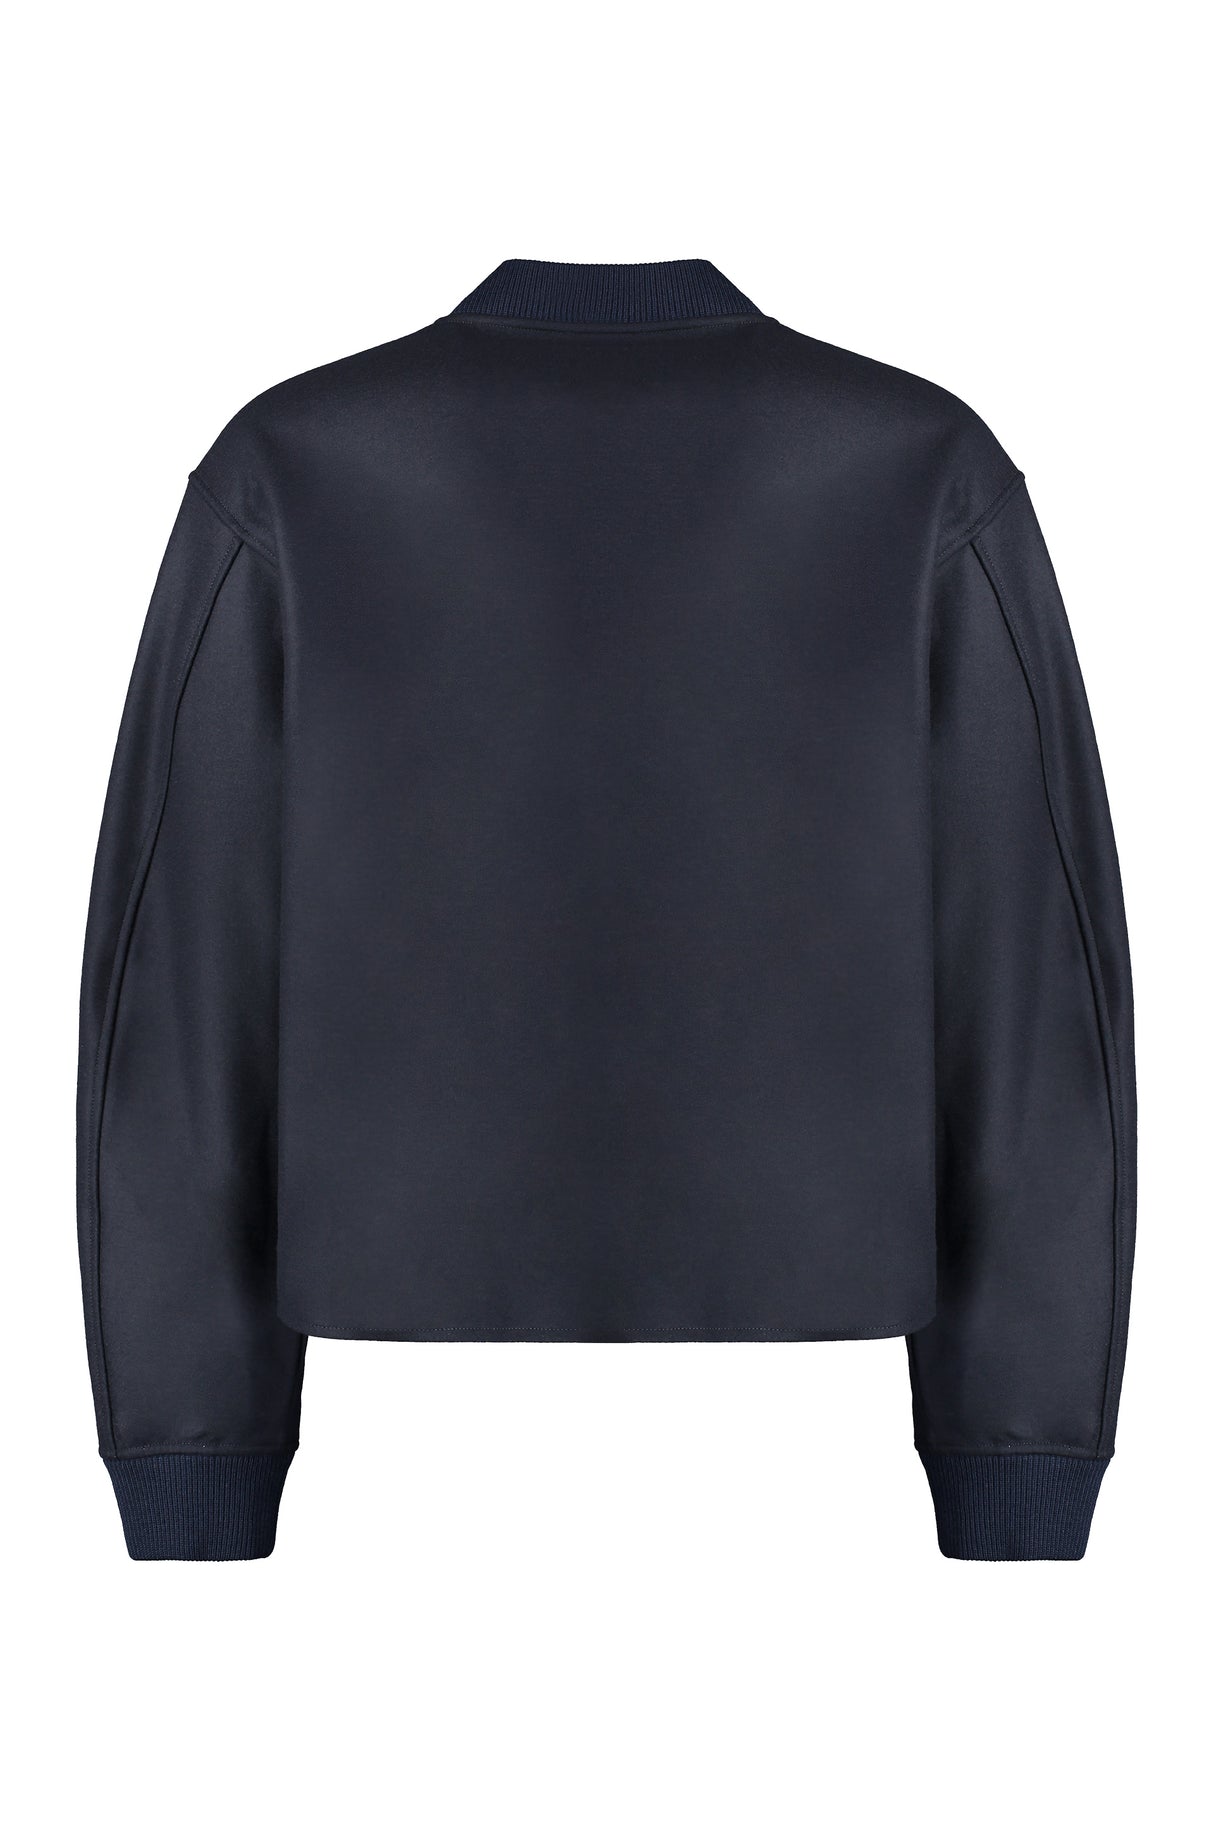 JIL SANDER Navy Blue Wool Blazer for Men - FW23 Collection